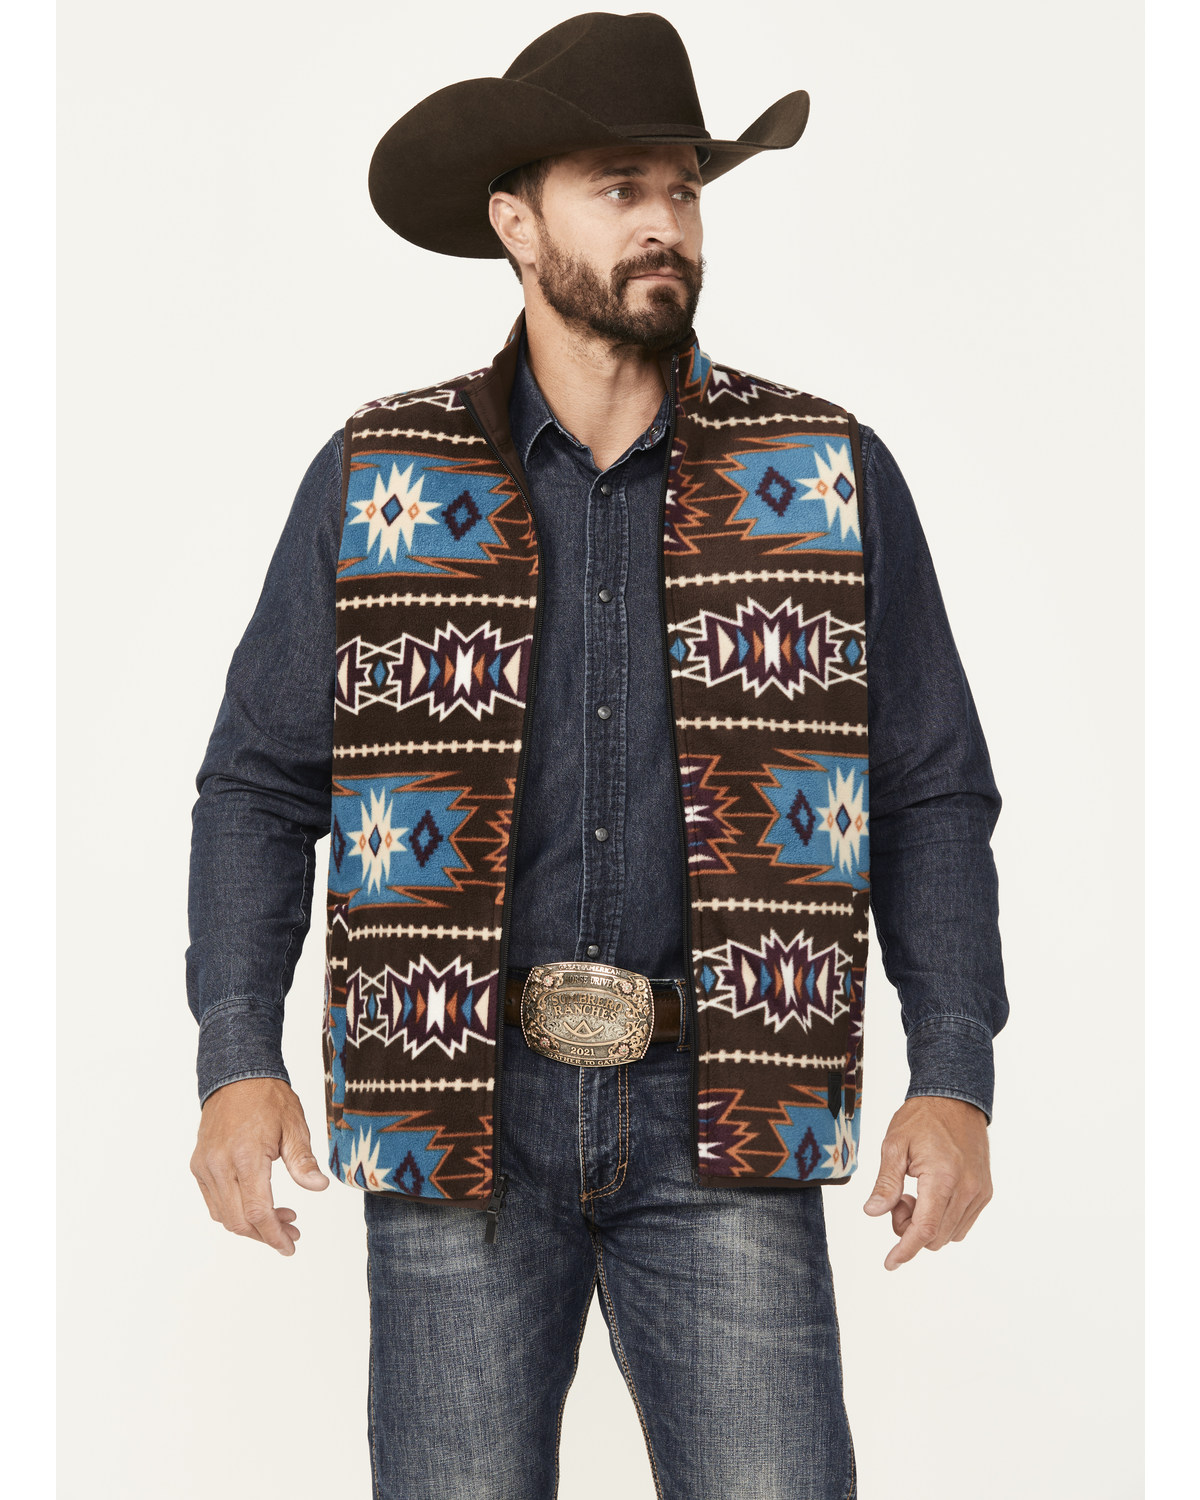 RANK 45® Men's Reversible Southwestern Softshell Vest